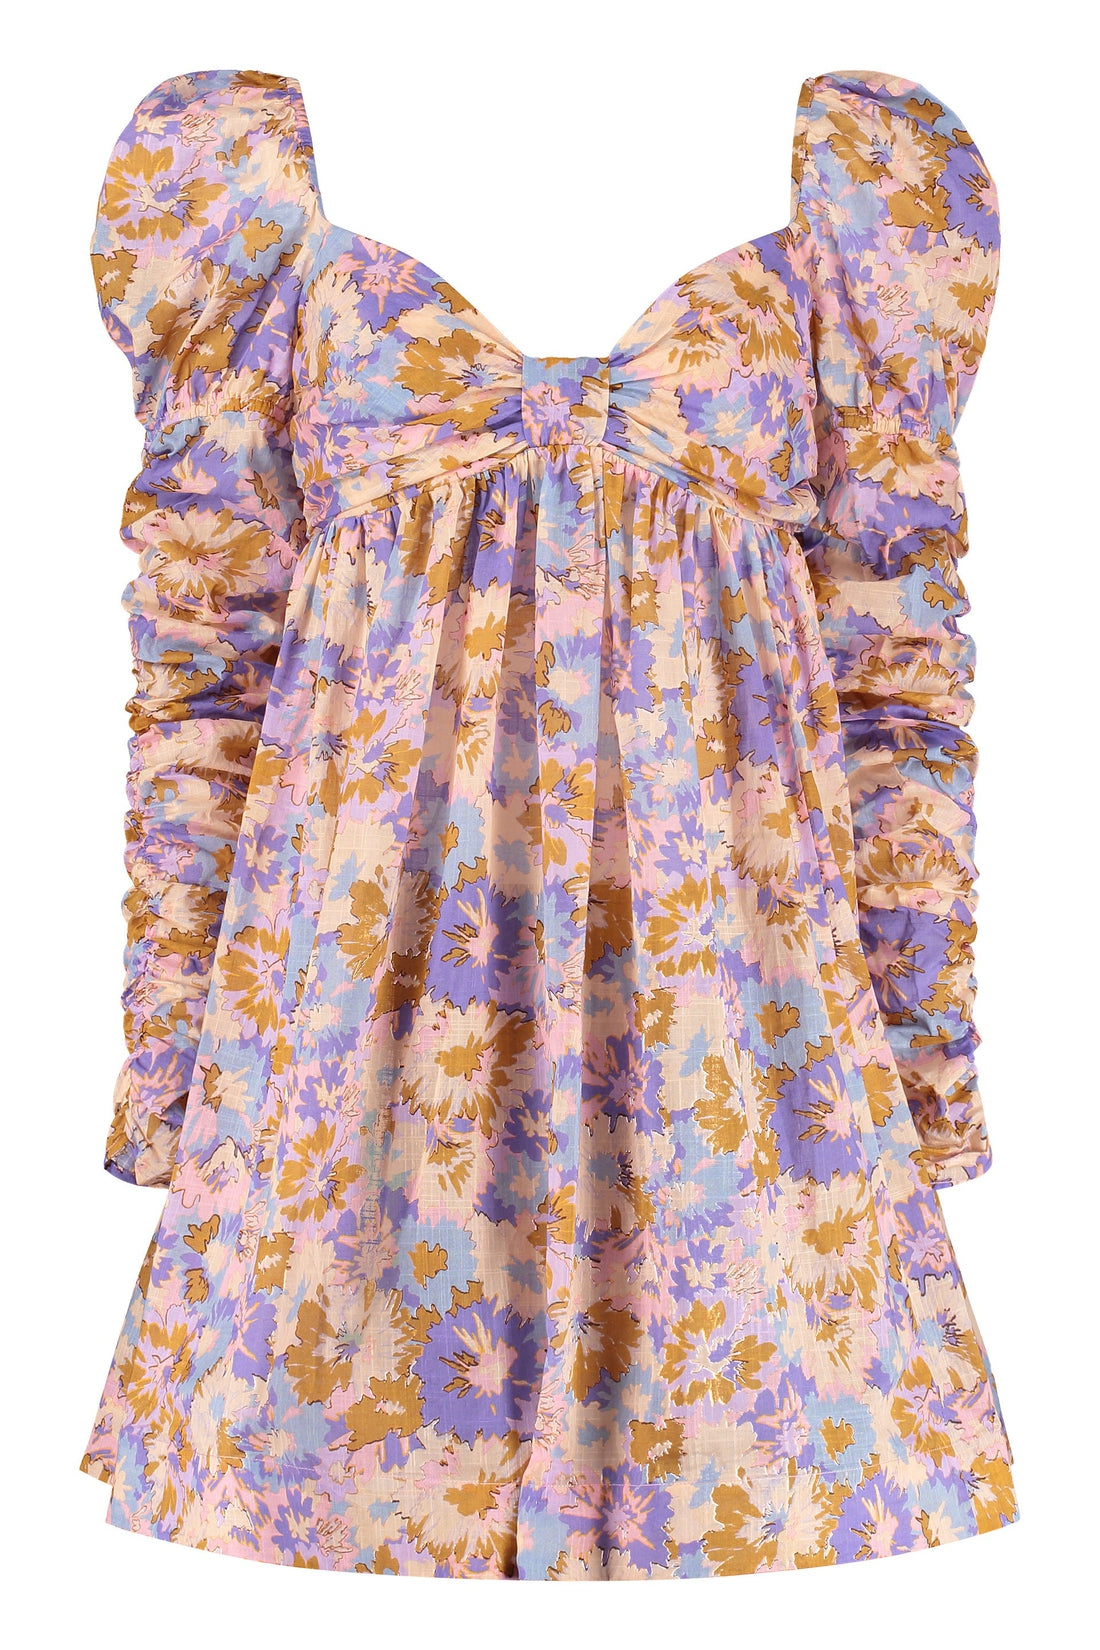 Zimmermann-OUTLET-SALE-Violet Dress with floral print-ARCHIVIST